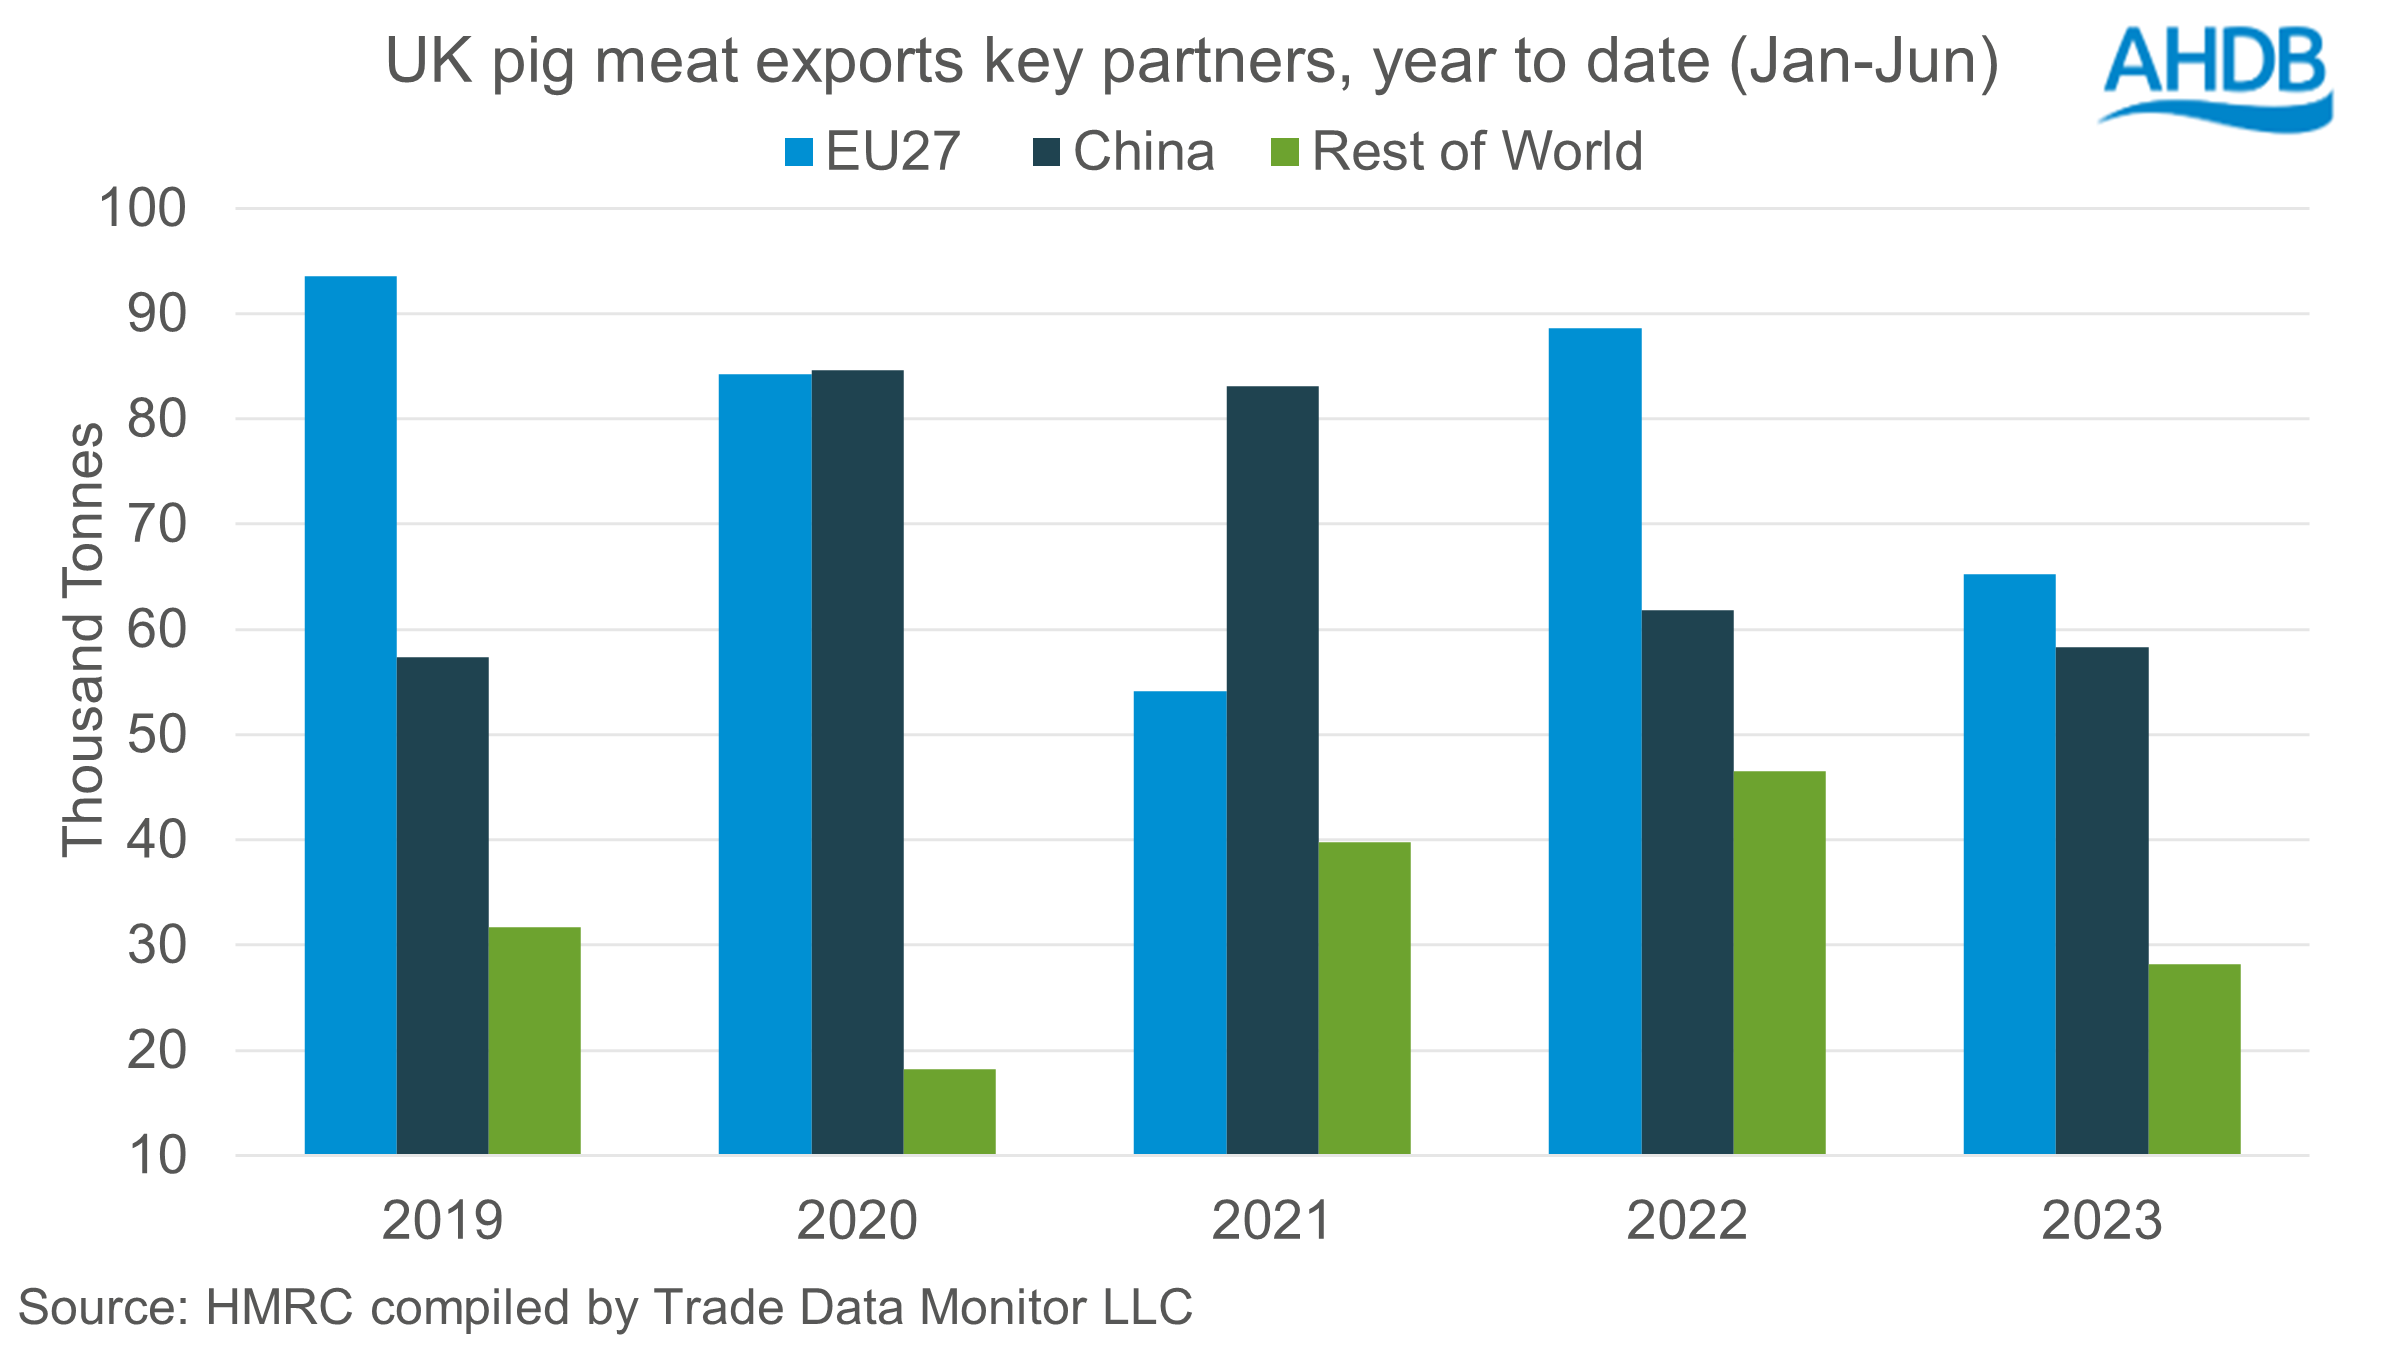 bar chart showing UK pig meat export volumes Jan-Jun by key destination